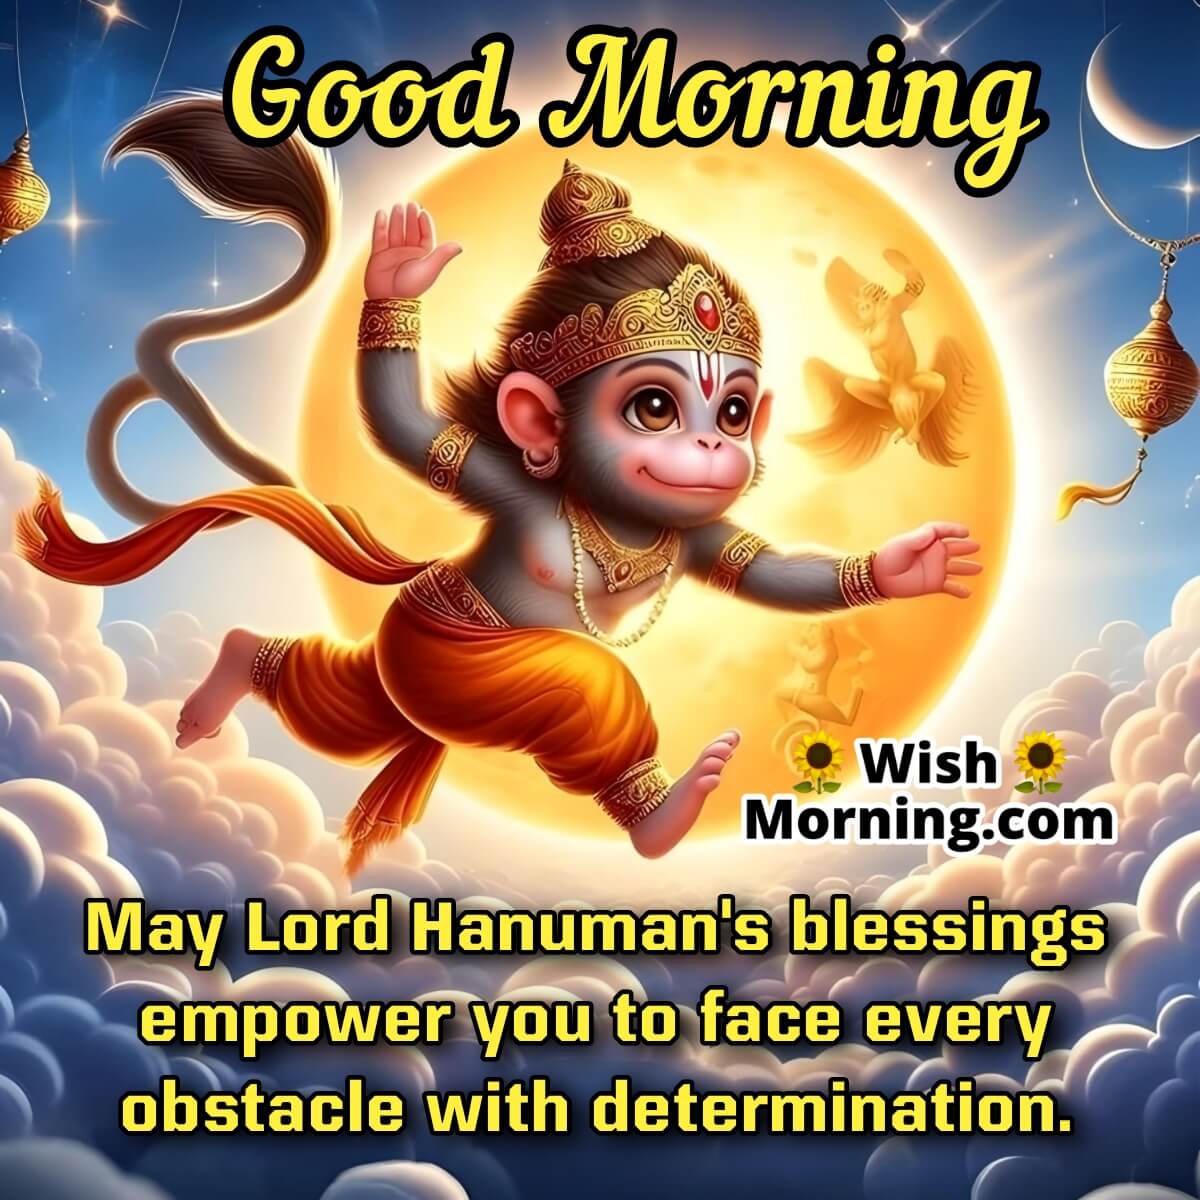 Good Morning Lord Hanuman Blessings